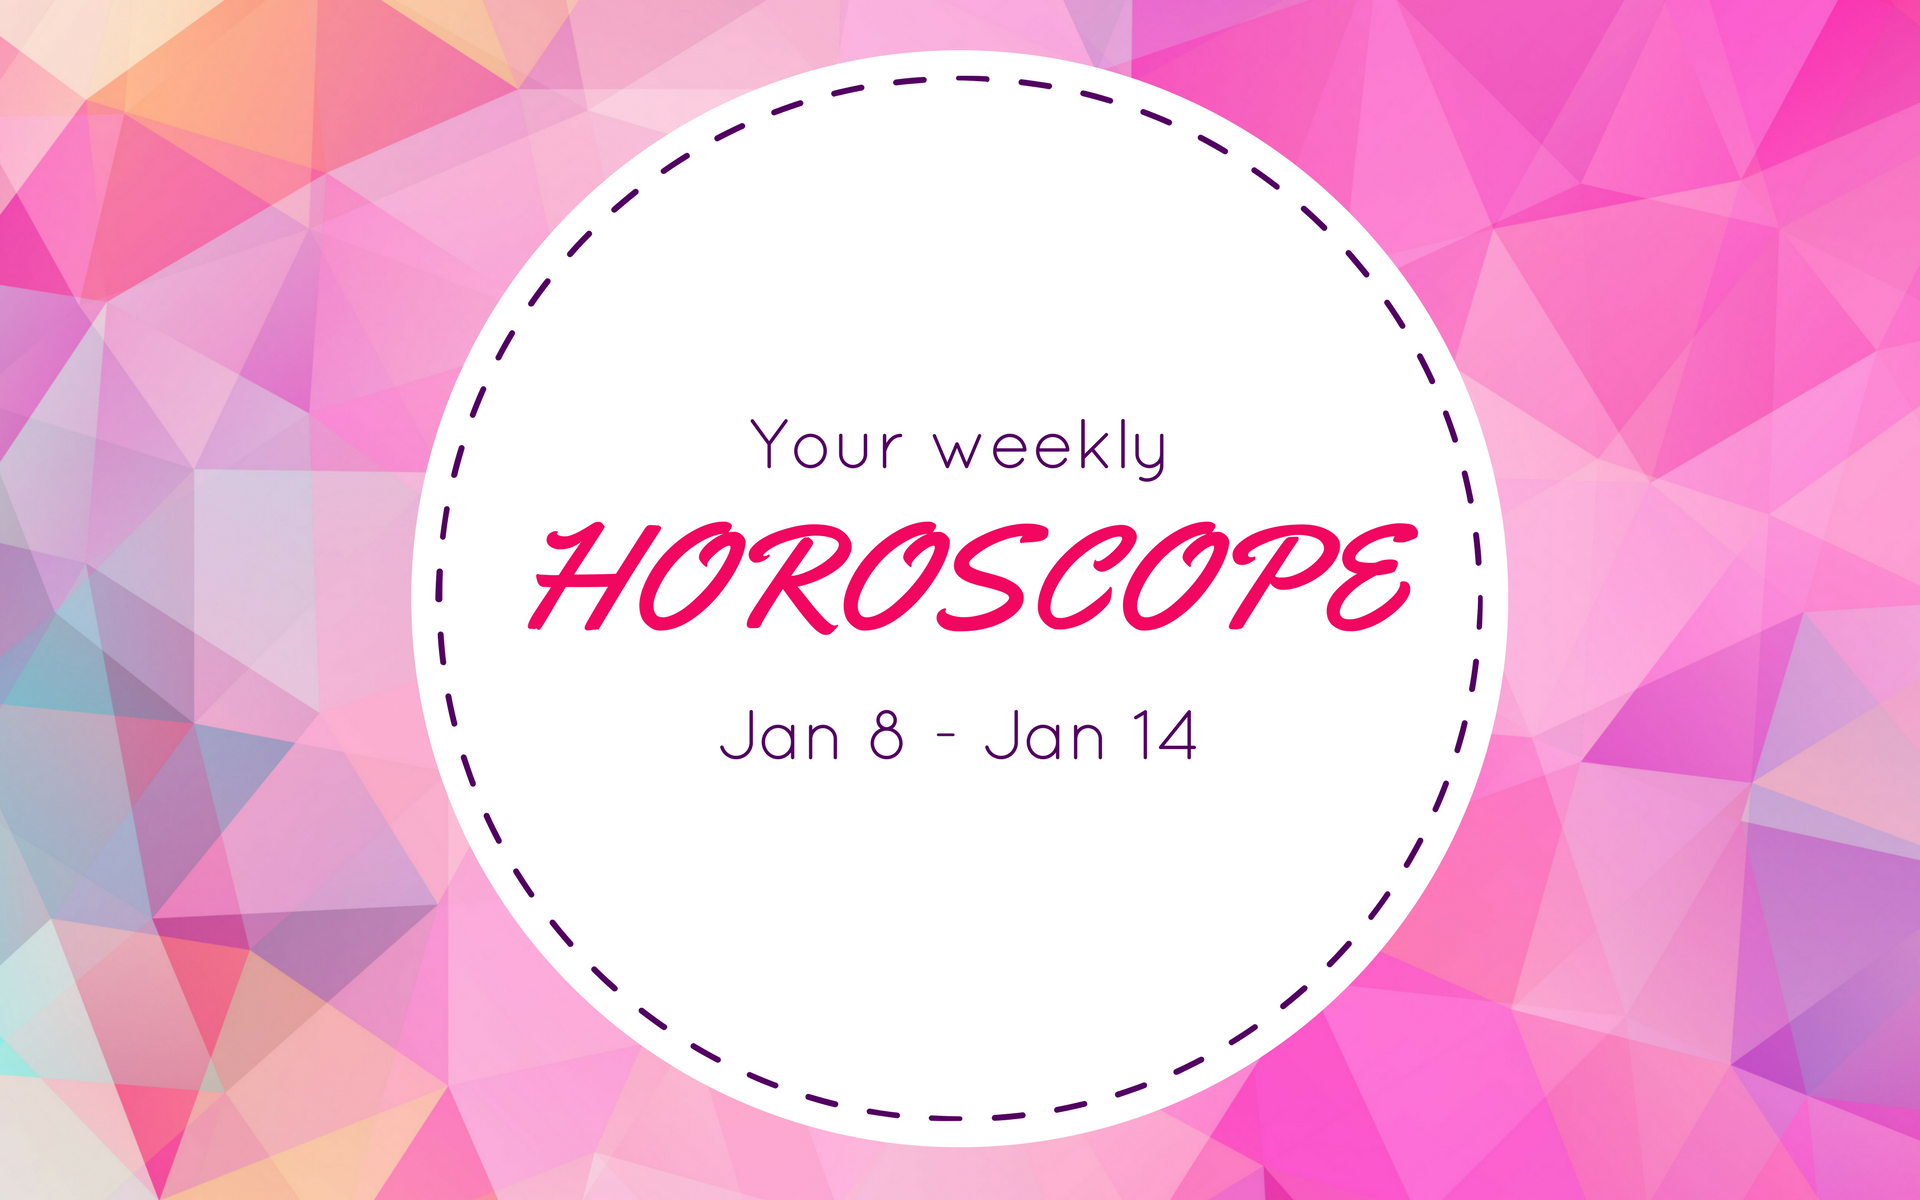 Your Weekly Horoscope: Jan 8 - Jan 14